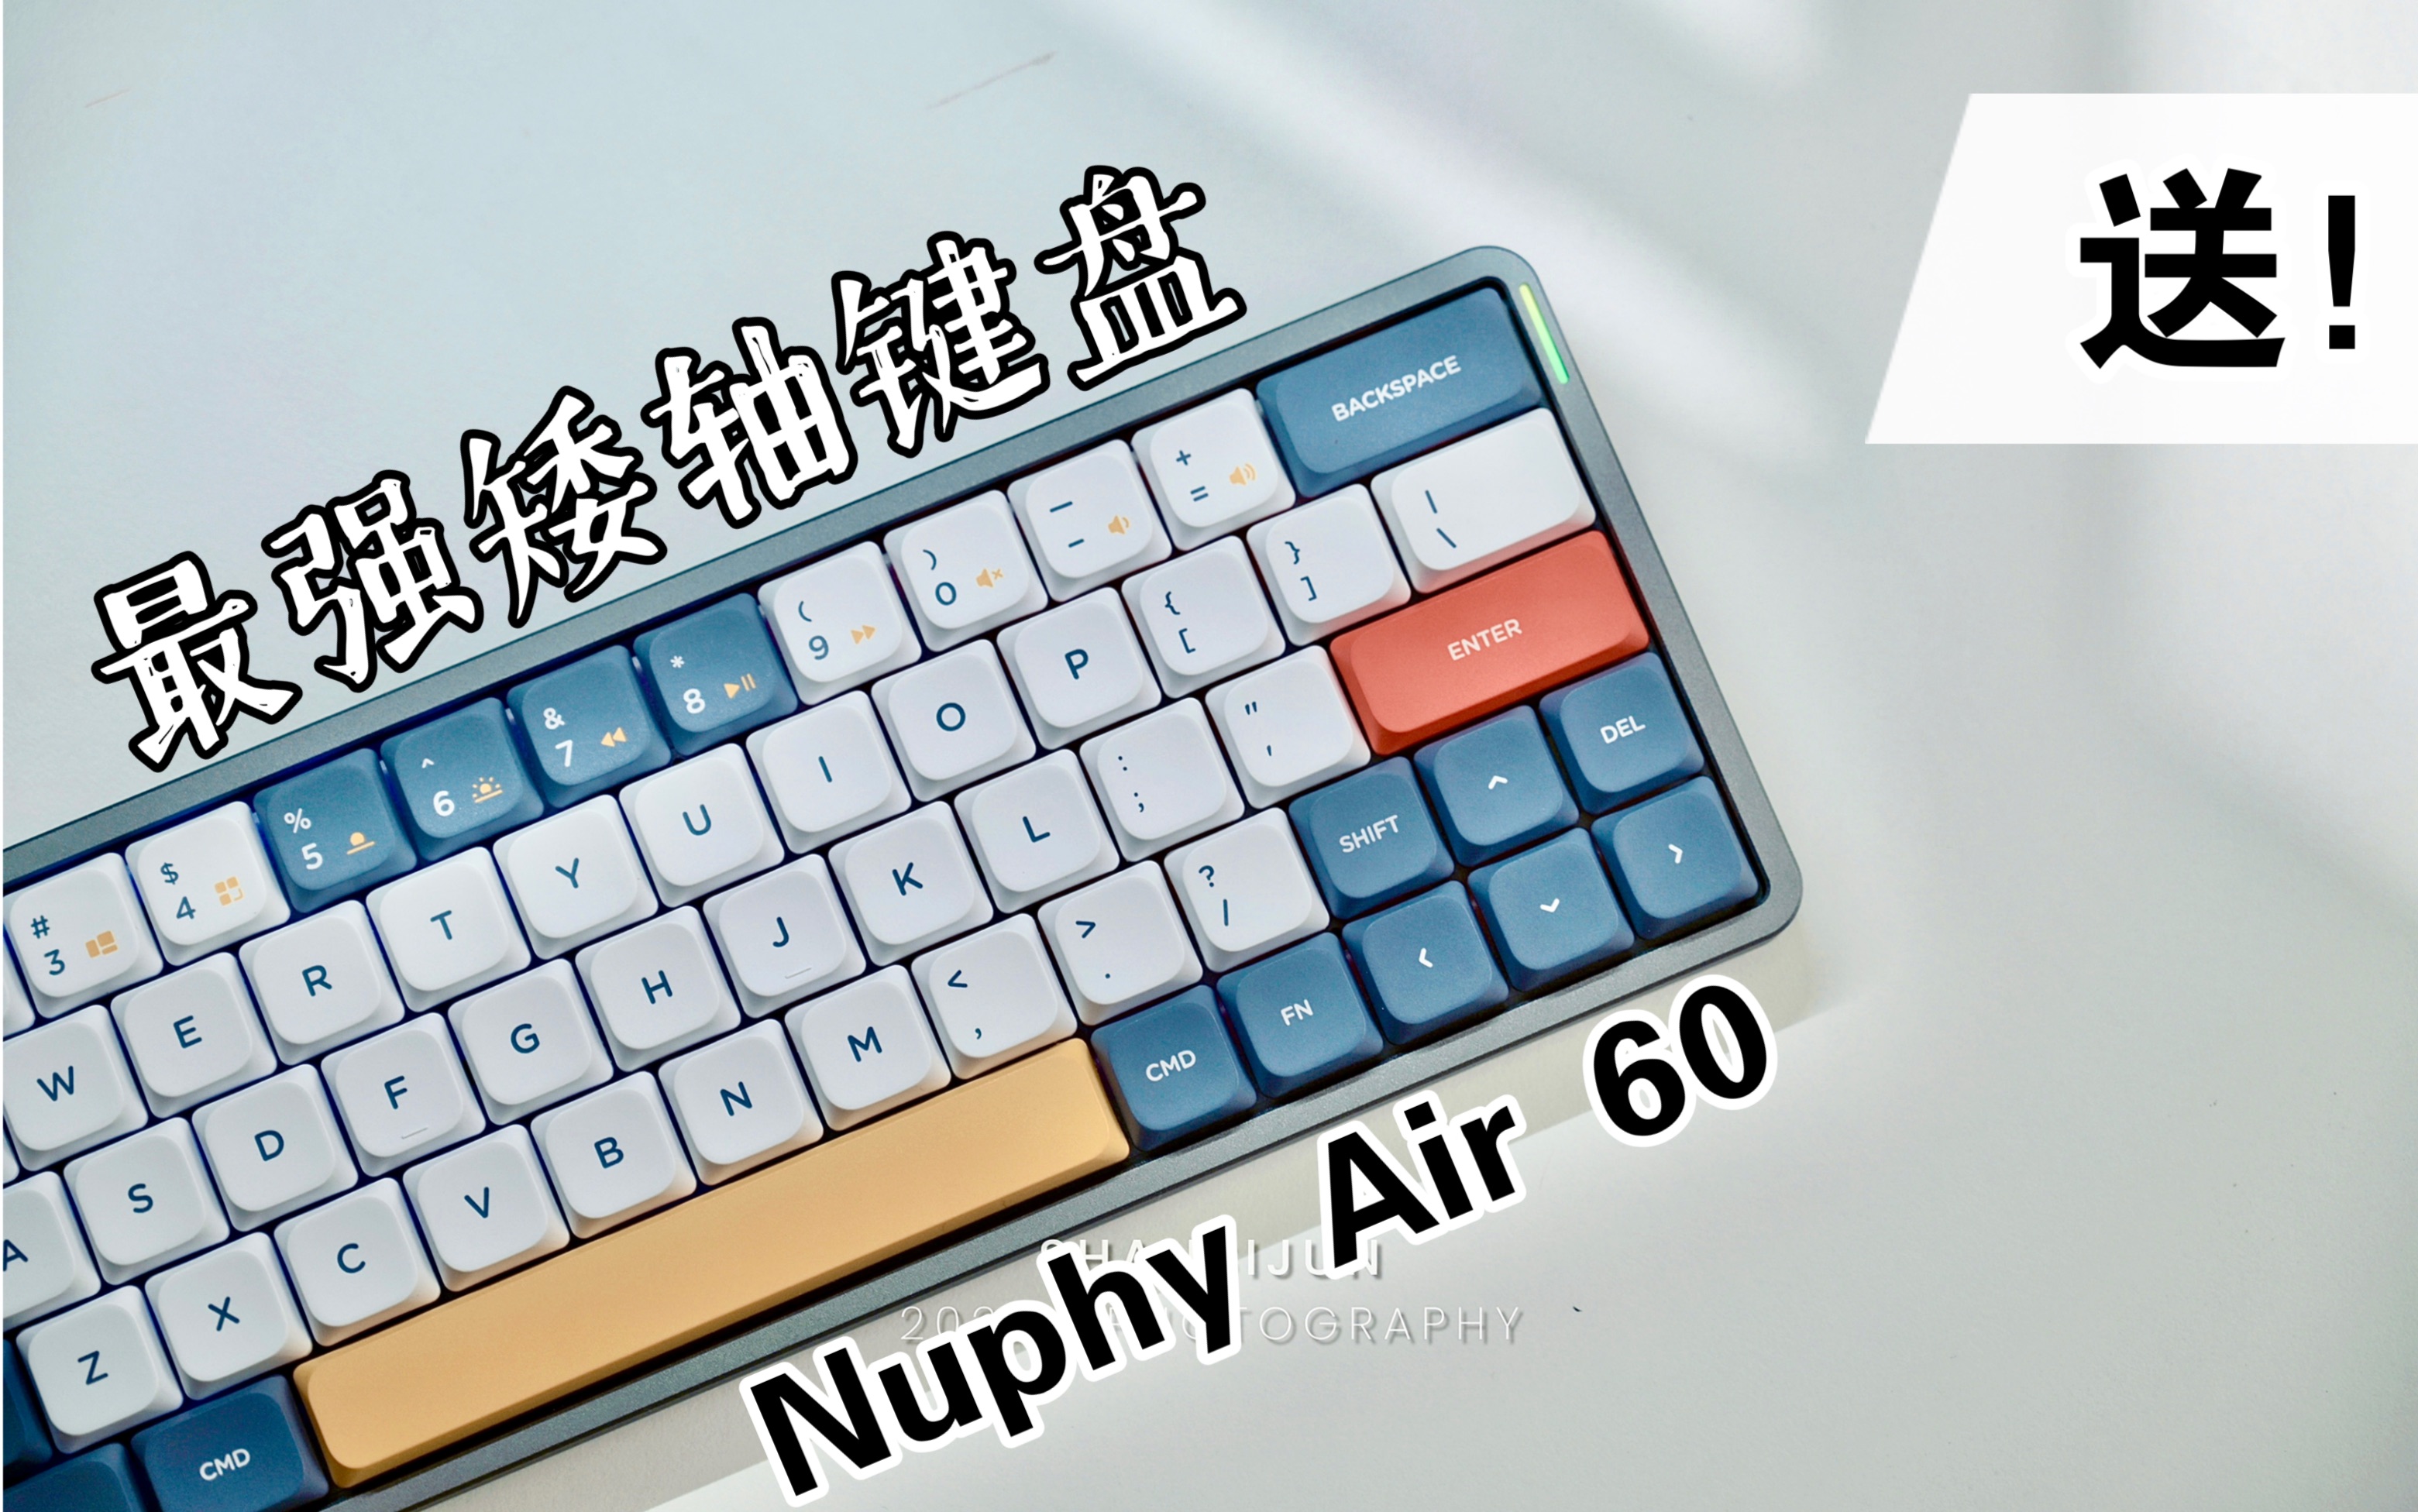 PC/タブレット PC周辺機器 我愿称之为目前最棒的轻薄机械键盘——Nuphy air 60机械键盘开箱简评